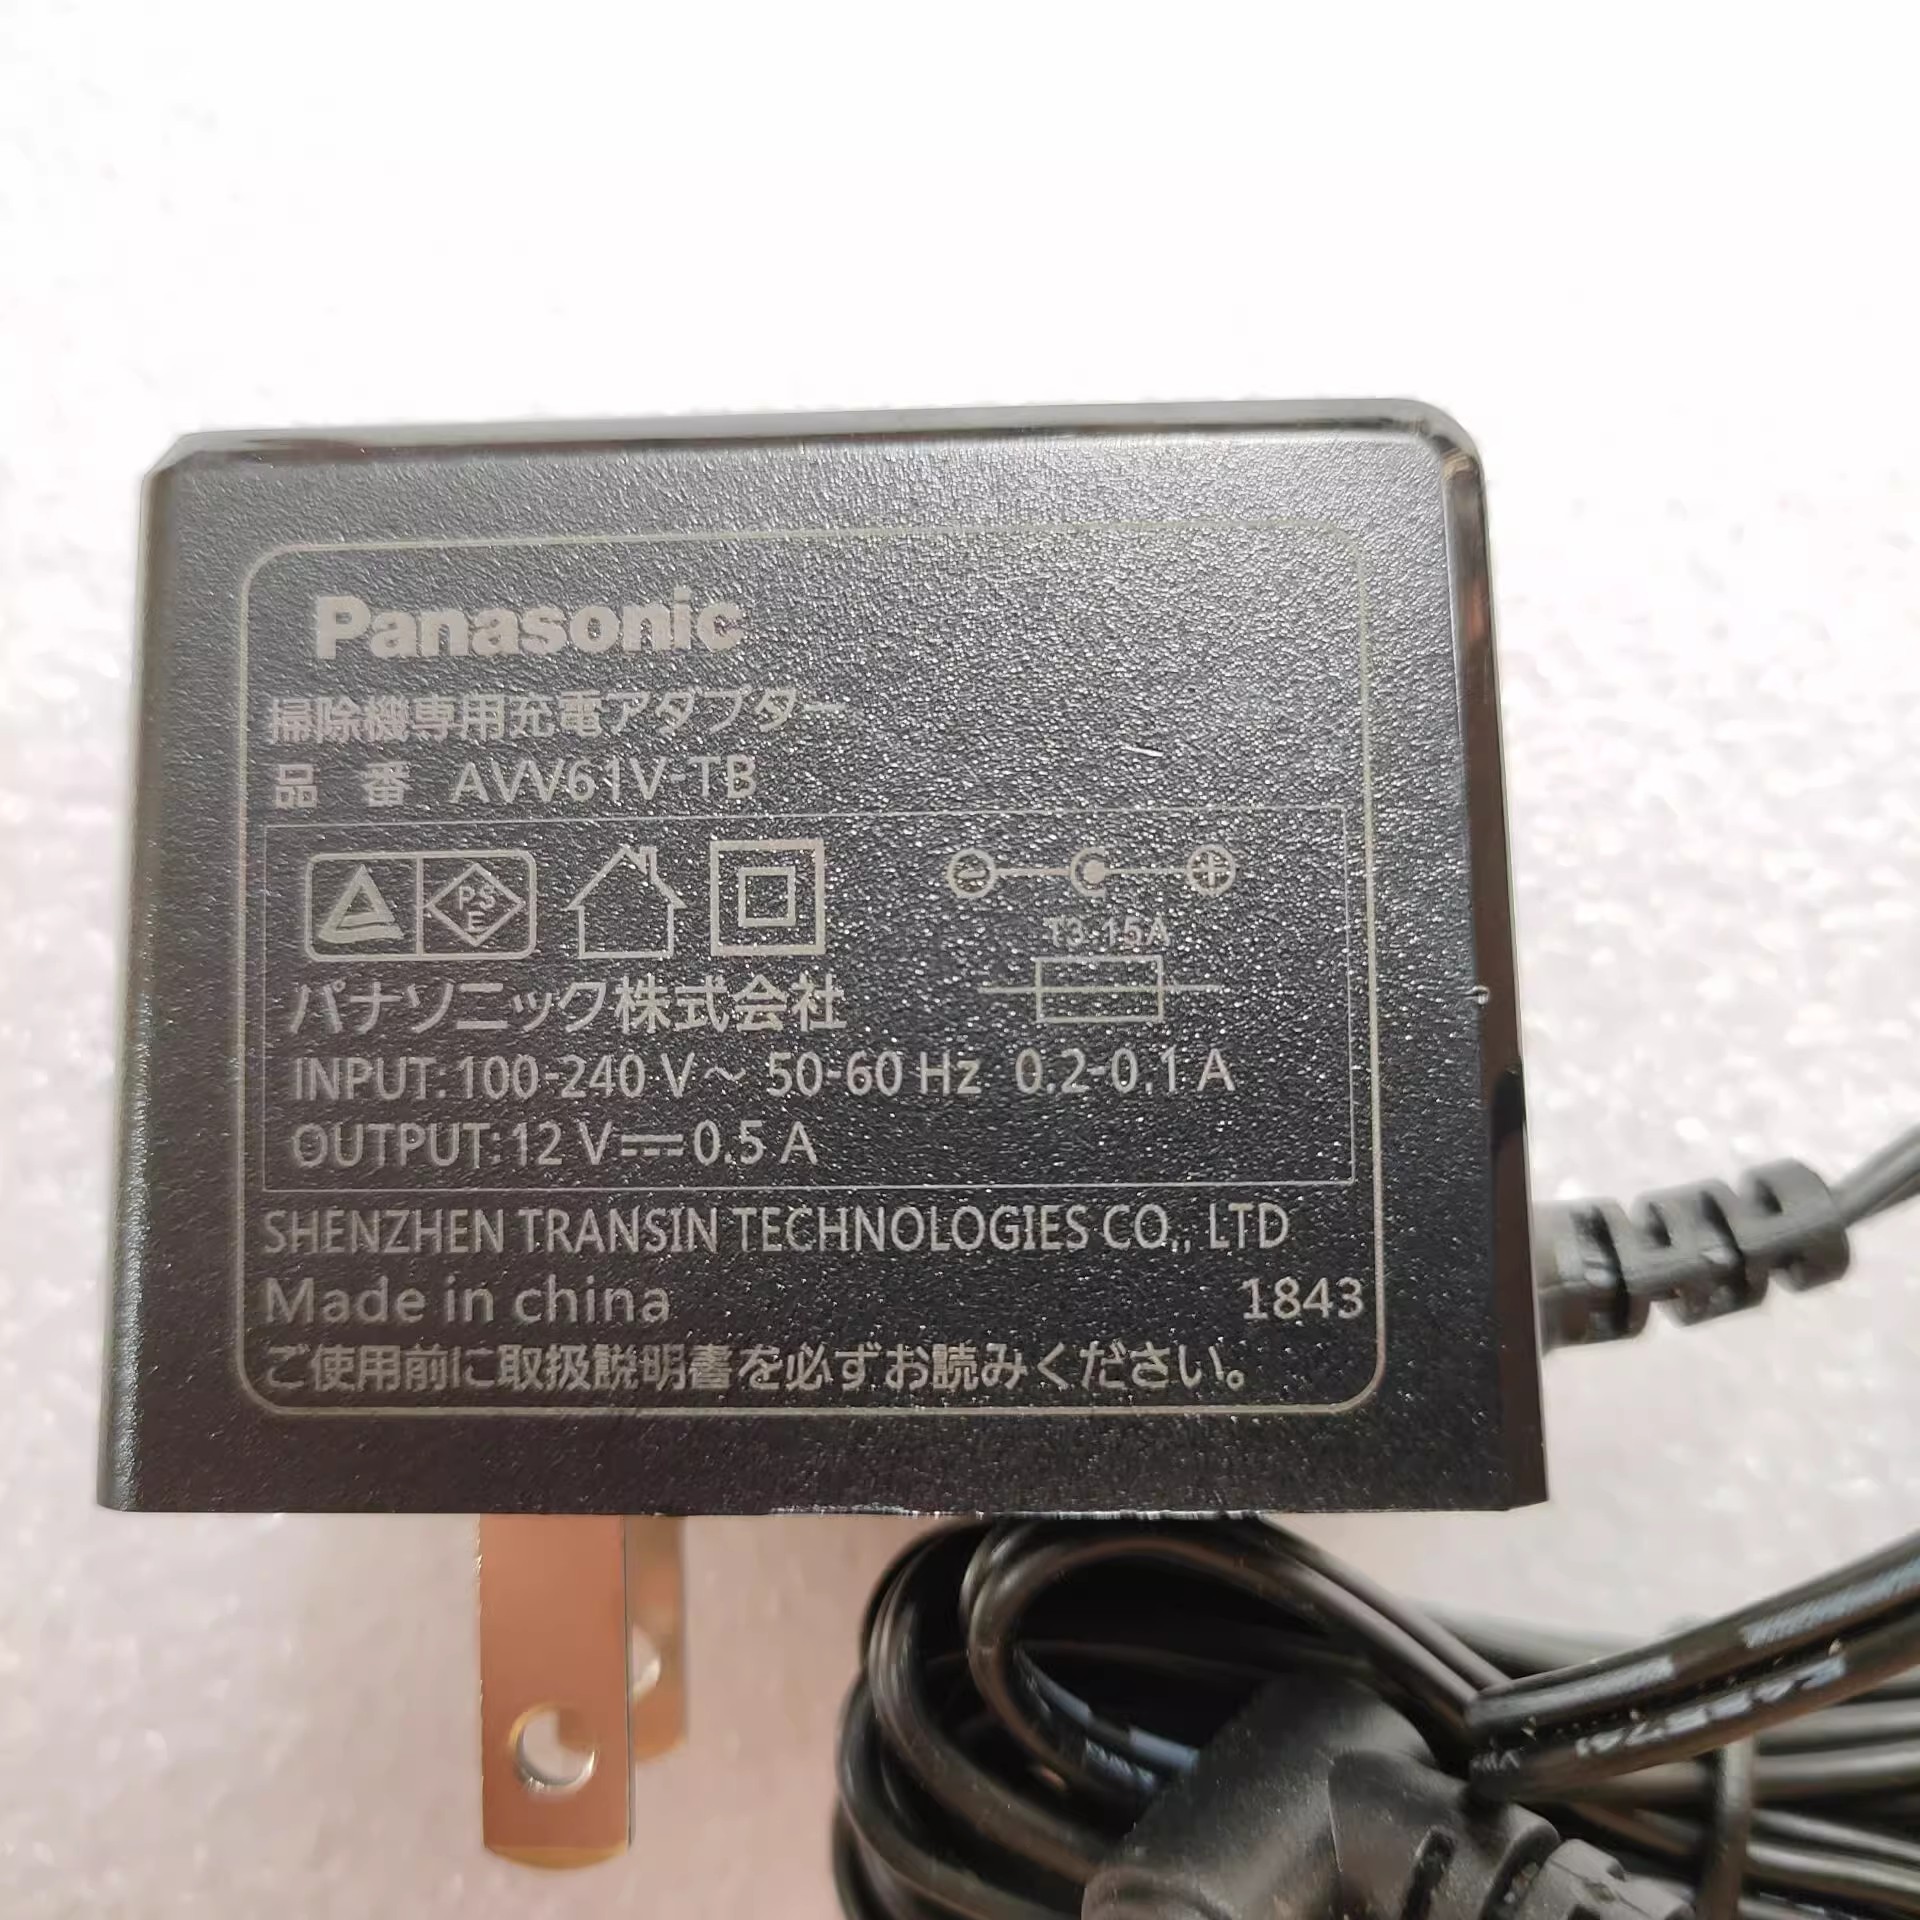 *Brand NEW* Panasonic AVV61V-TB MC-SBU1FC 12V 0.5A AC DC ADAPTHE POWER Supply - Click Image to Close